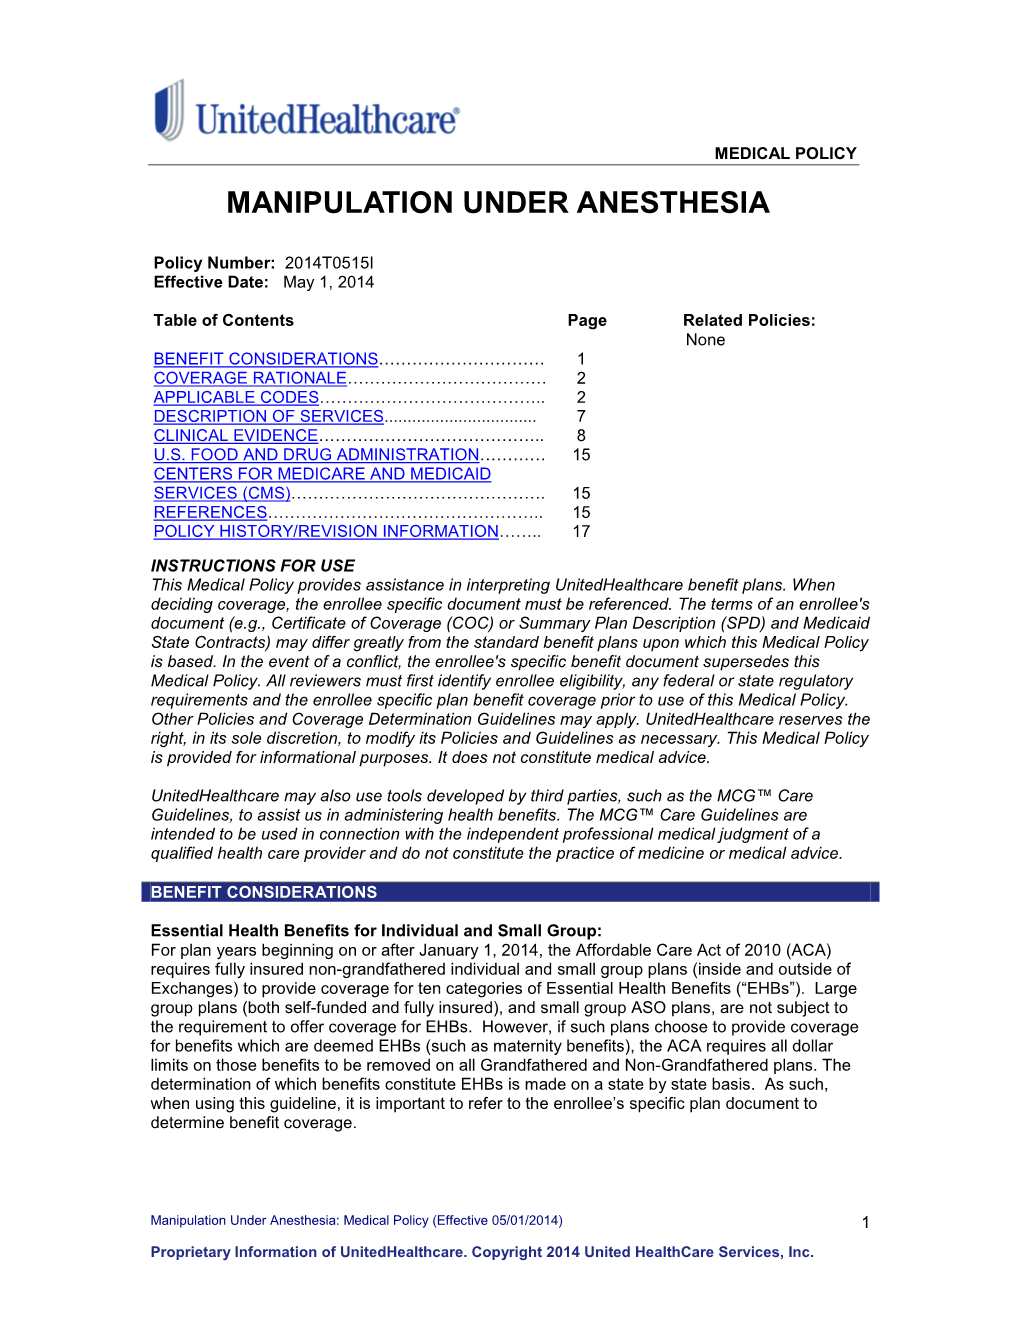 Manipulation Under Anesthesiaco